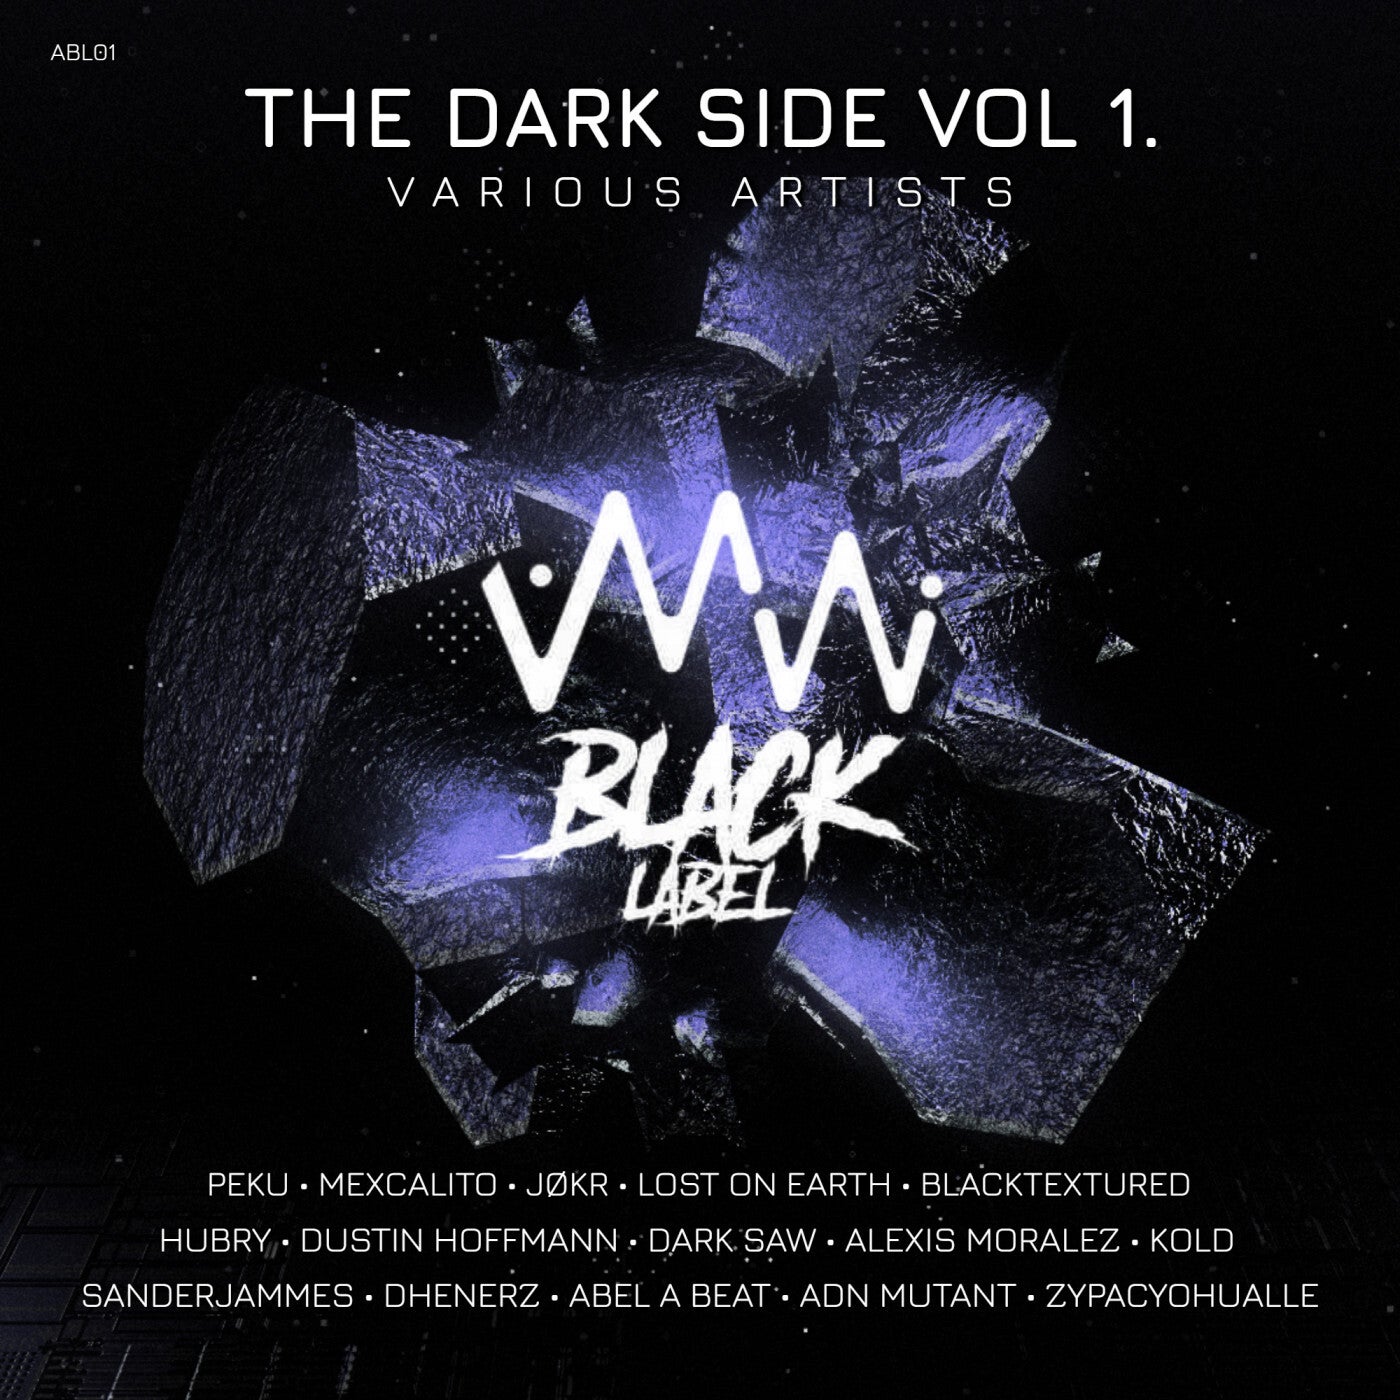 The Dark Side Vol 1